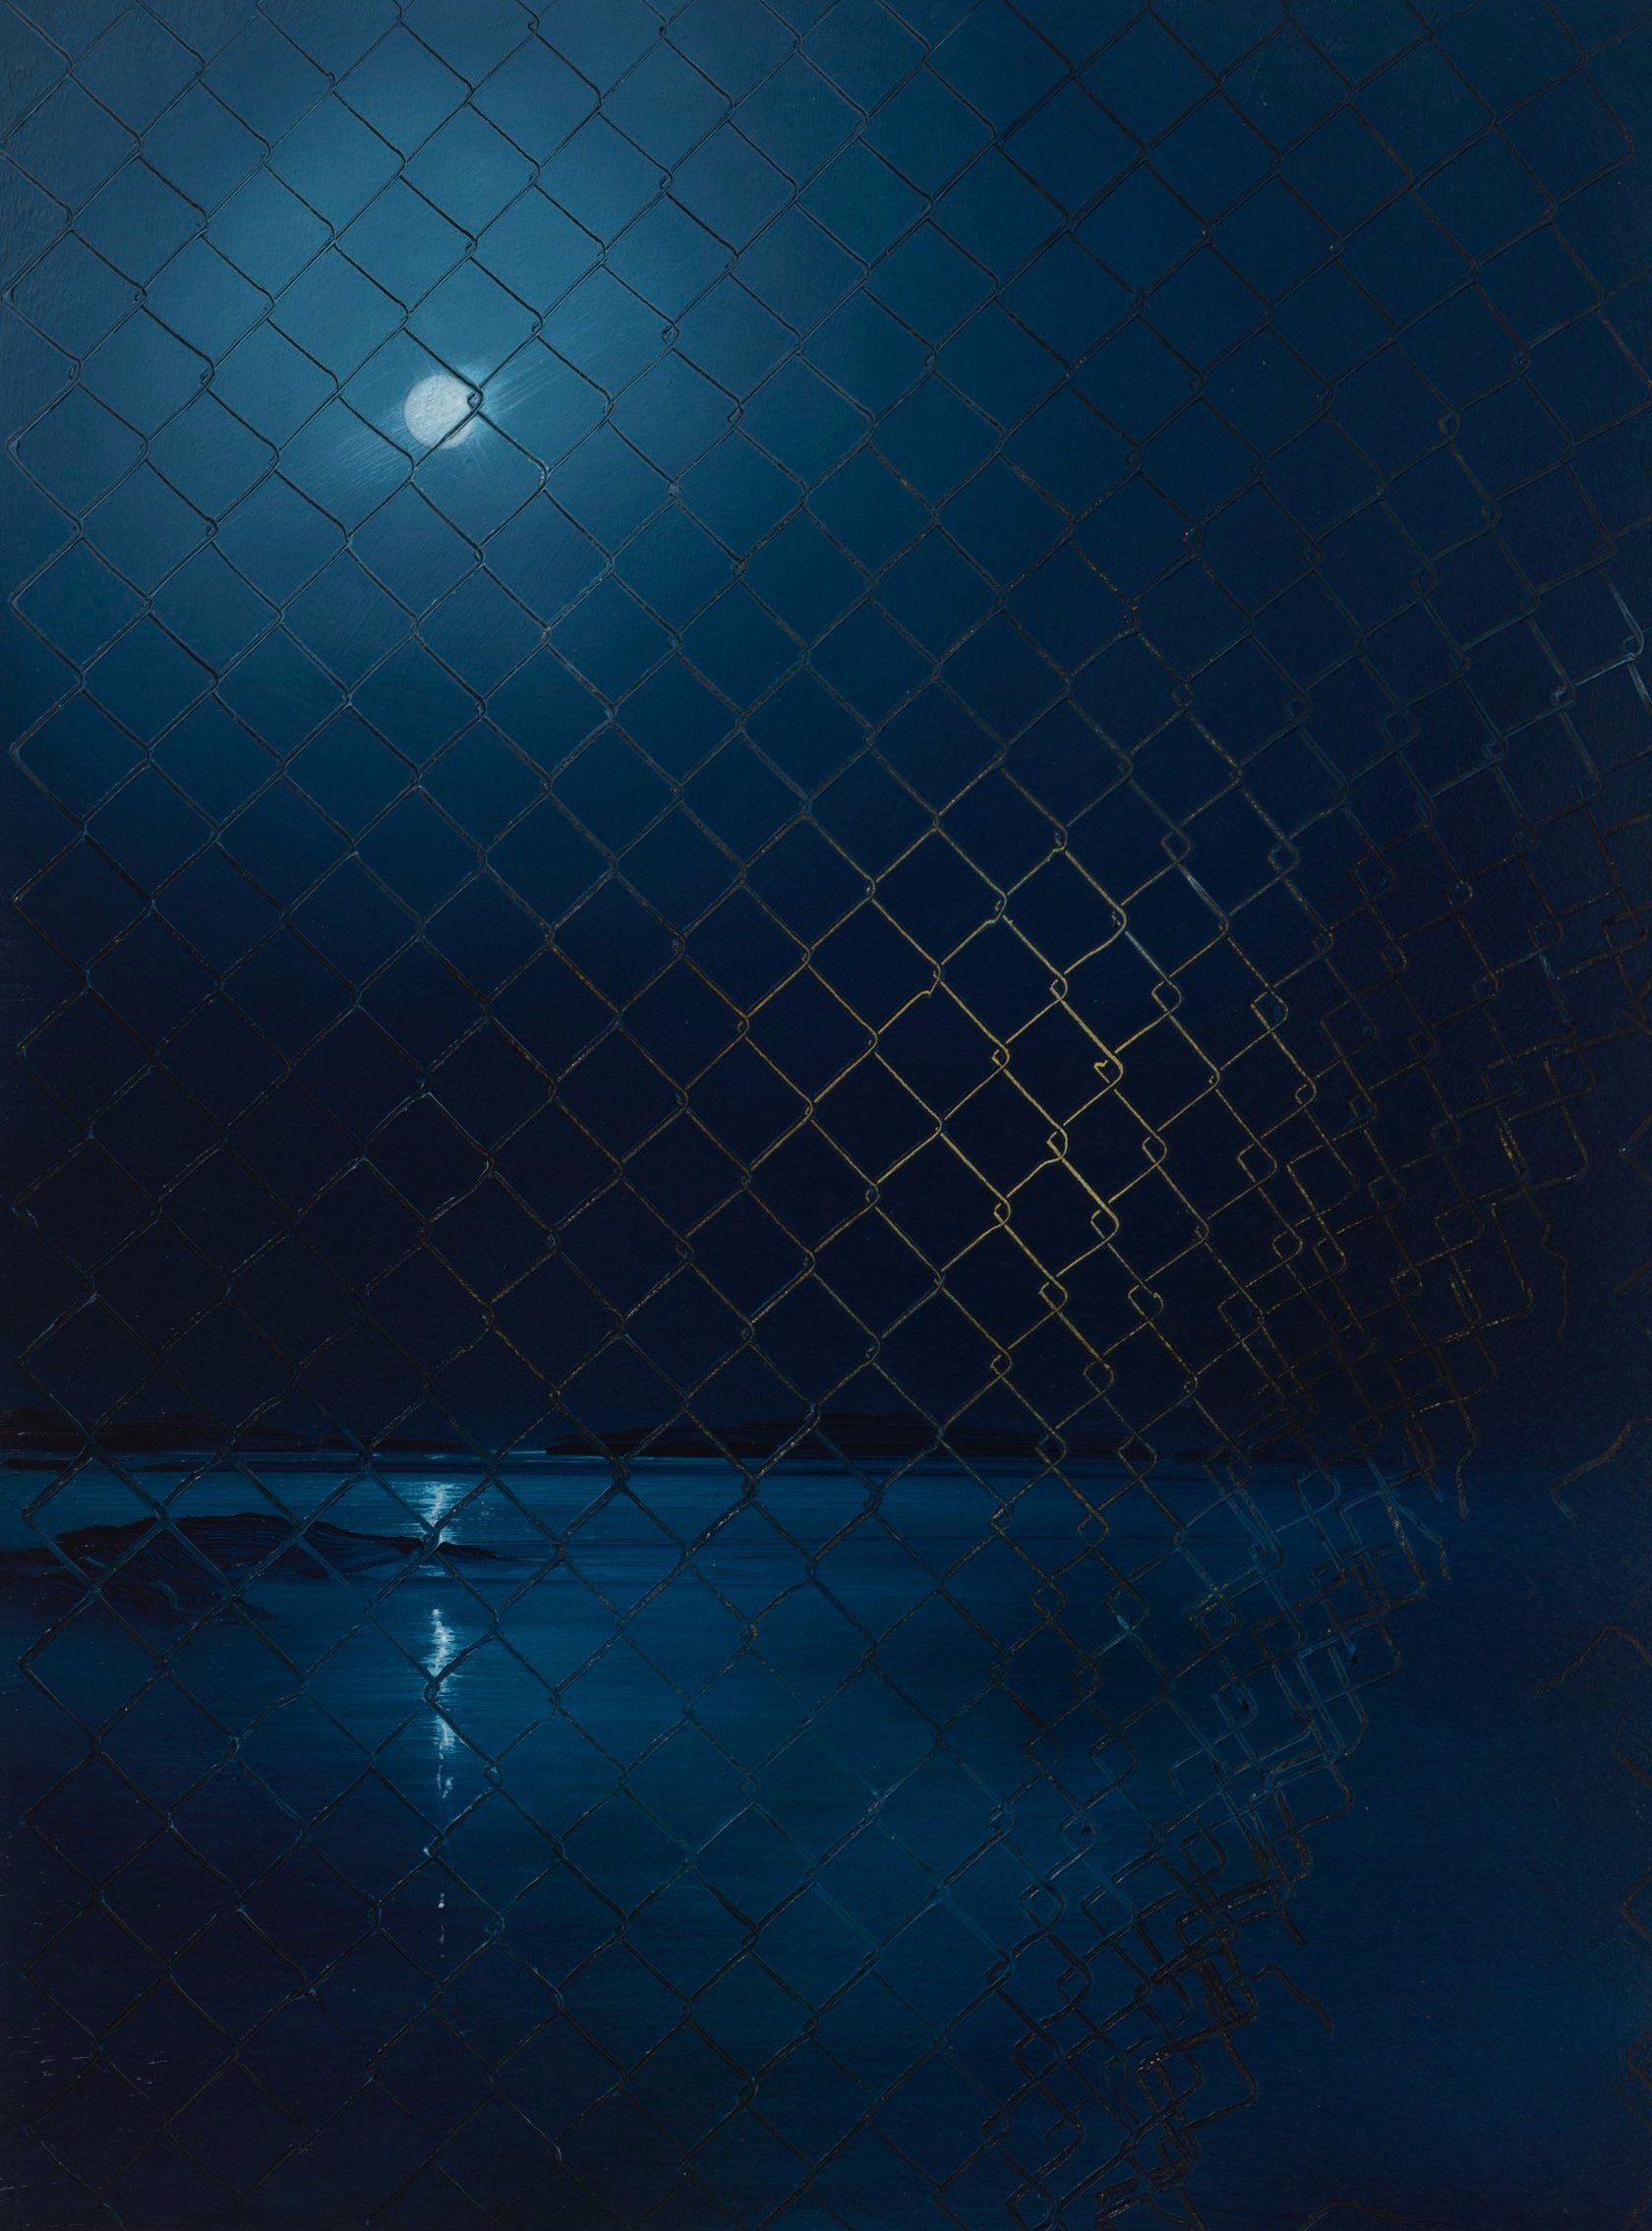 Fence/Moon (#2219)